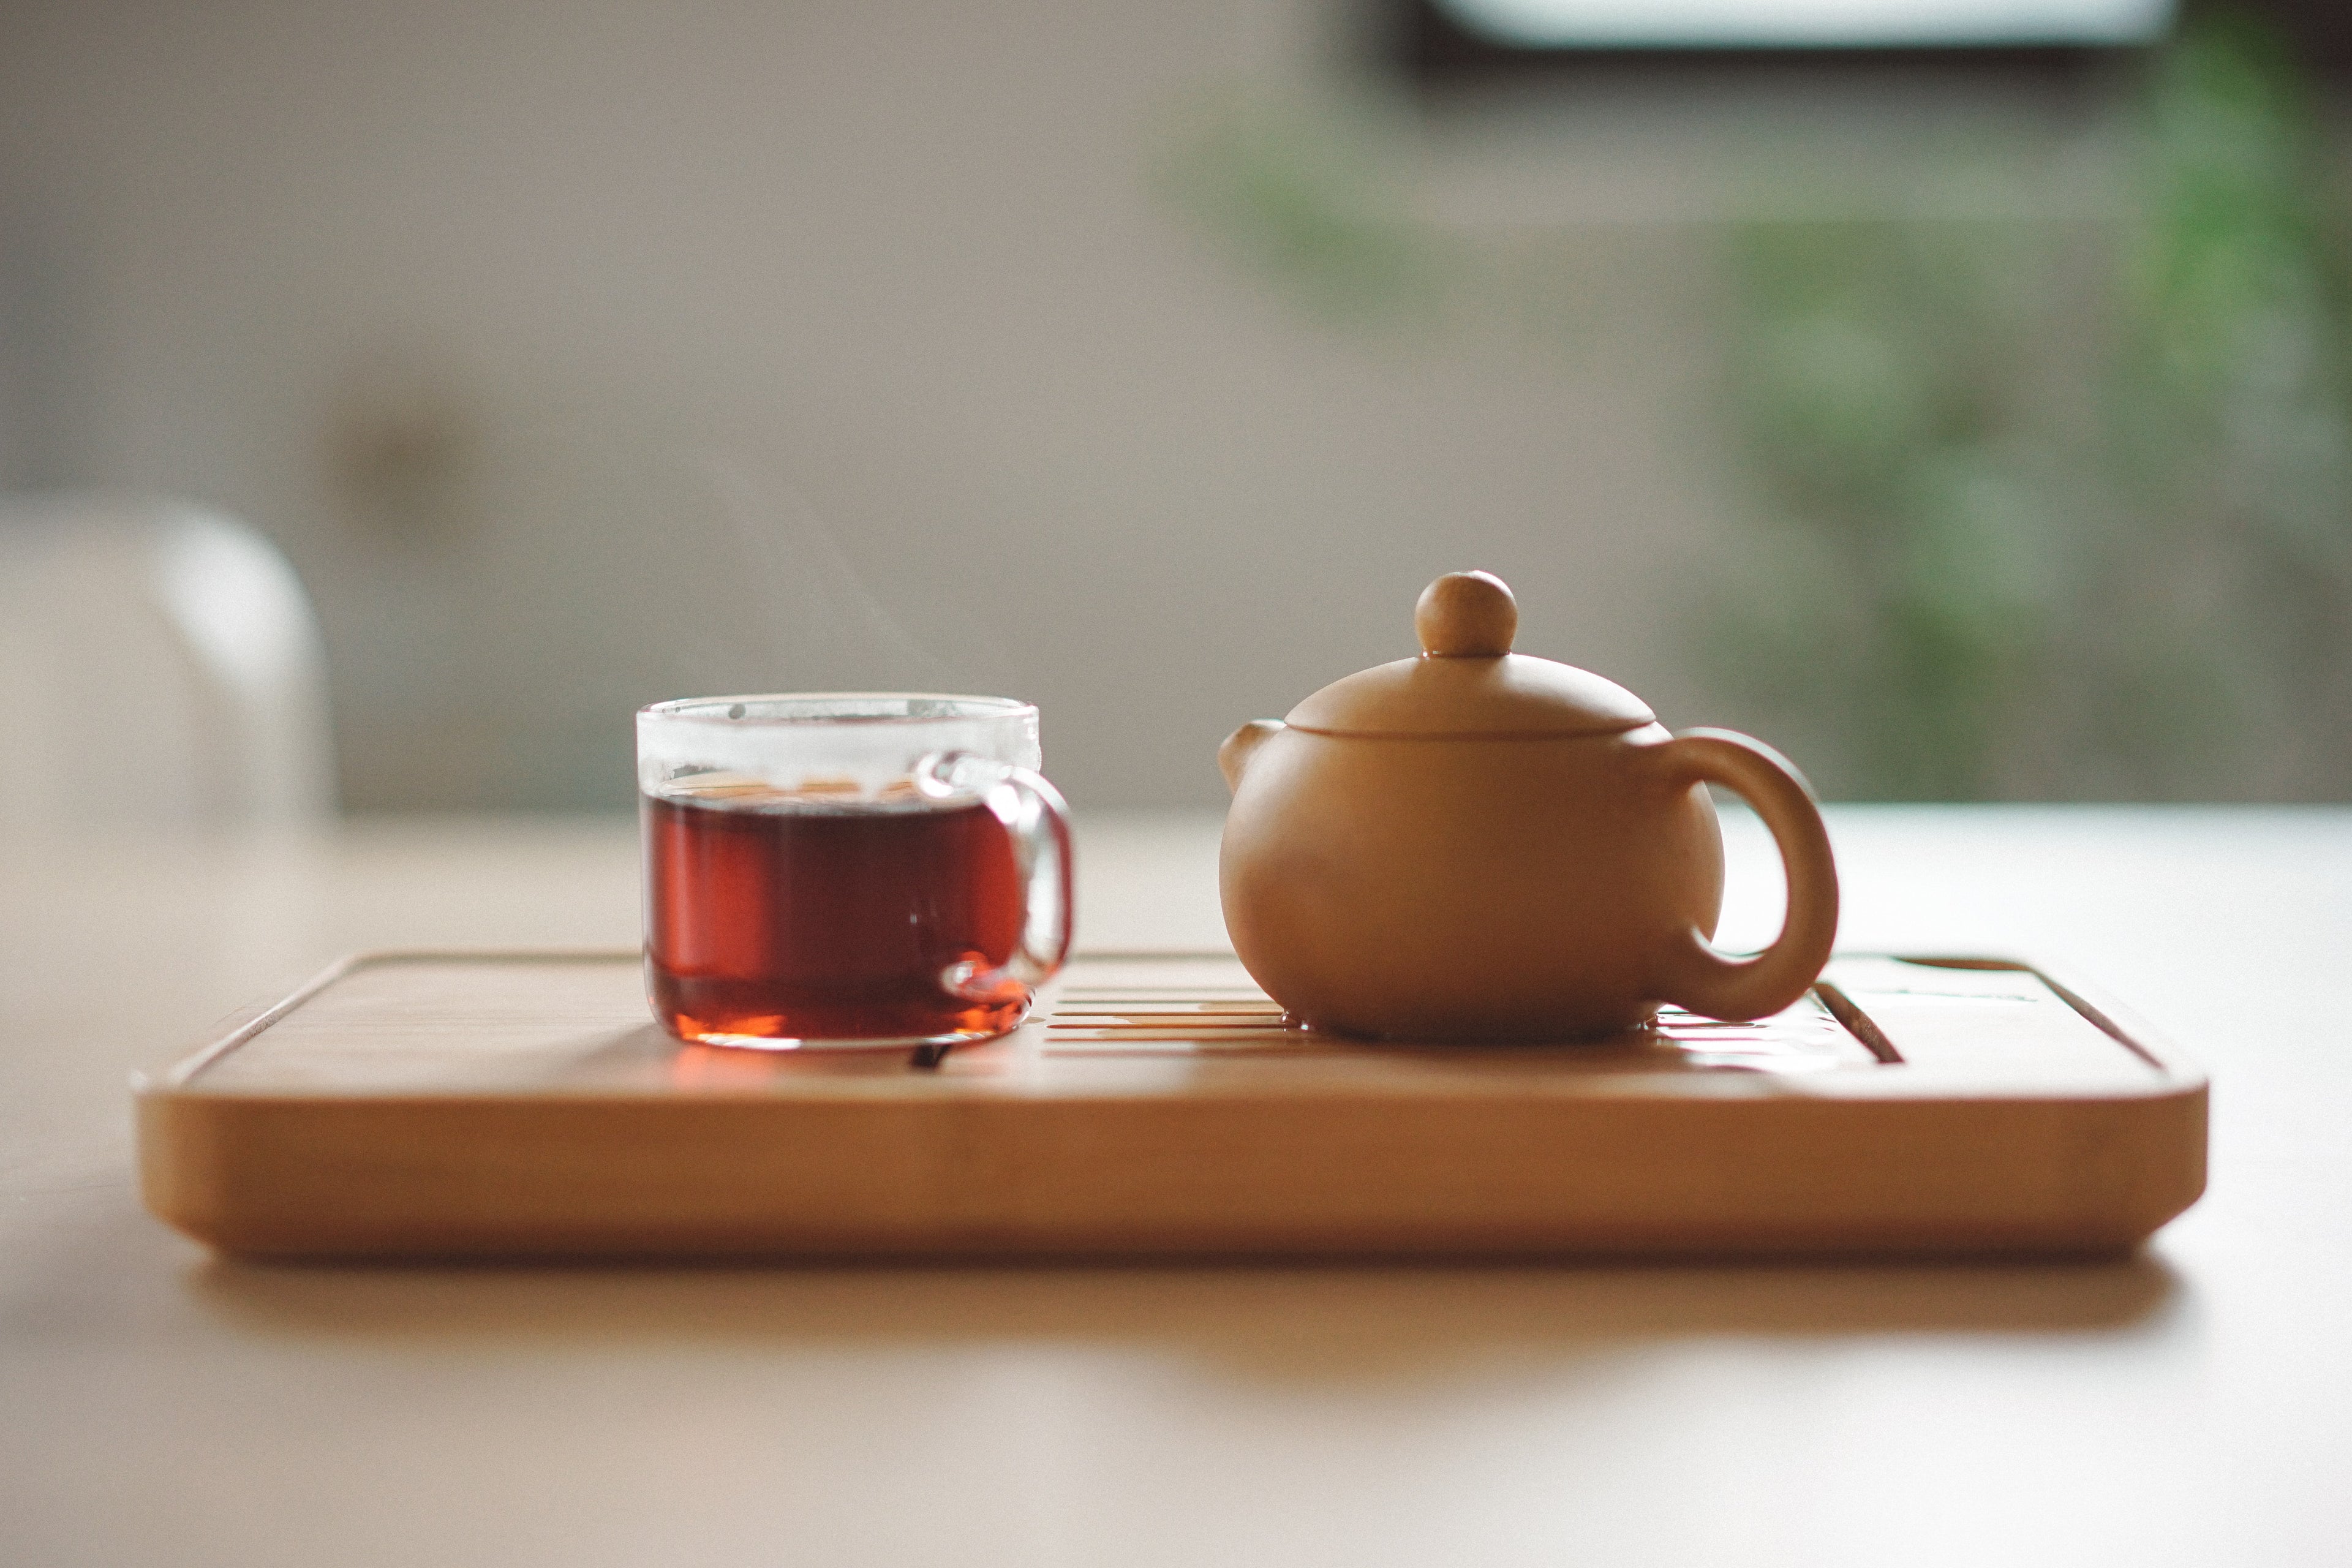 Traditional Tea